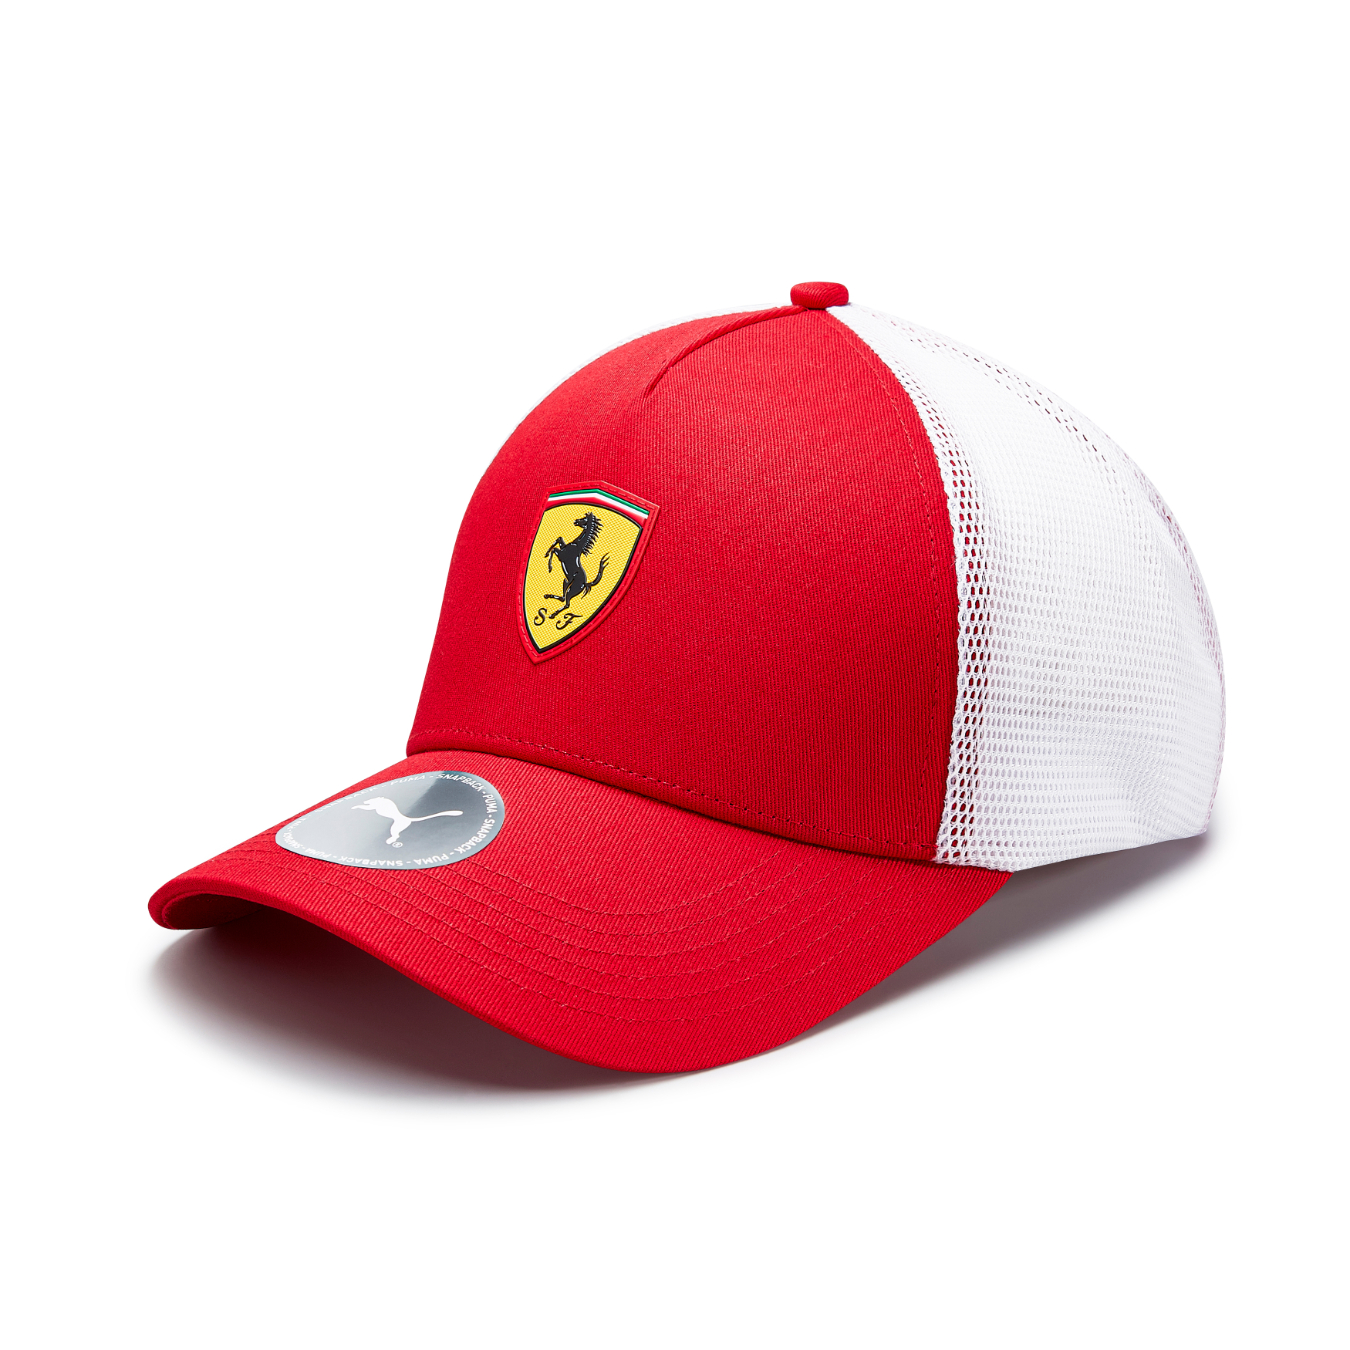 Acheter Gorra Ferrari F1 GP México. Disponible dans le noir, unisexe